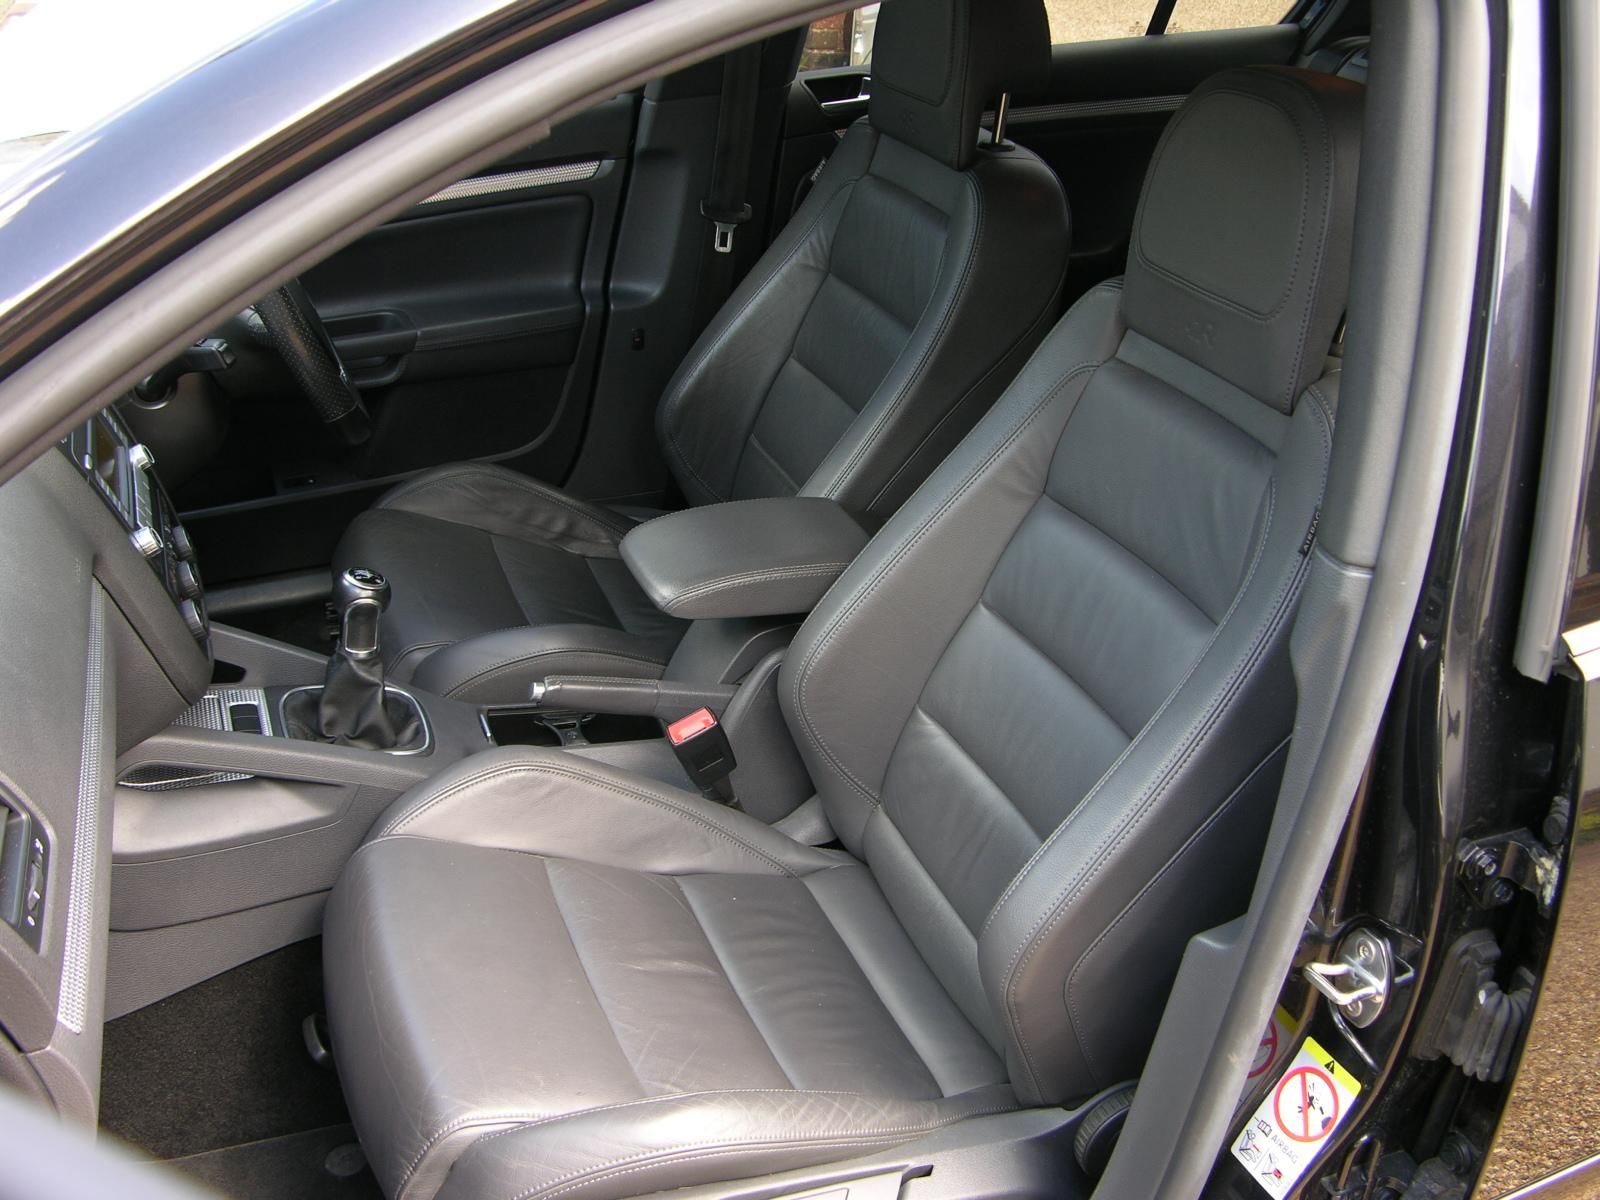 Interior of a VW Golf R32